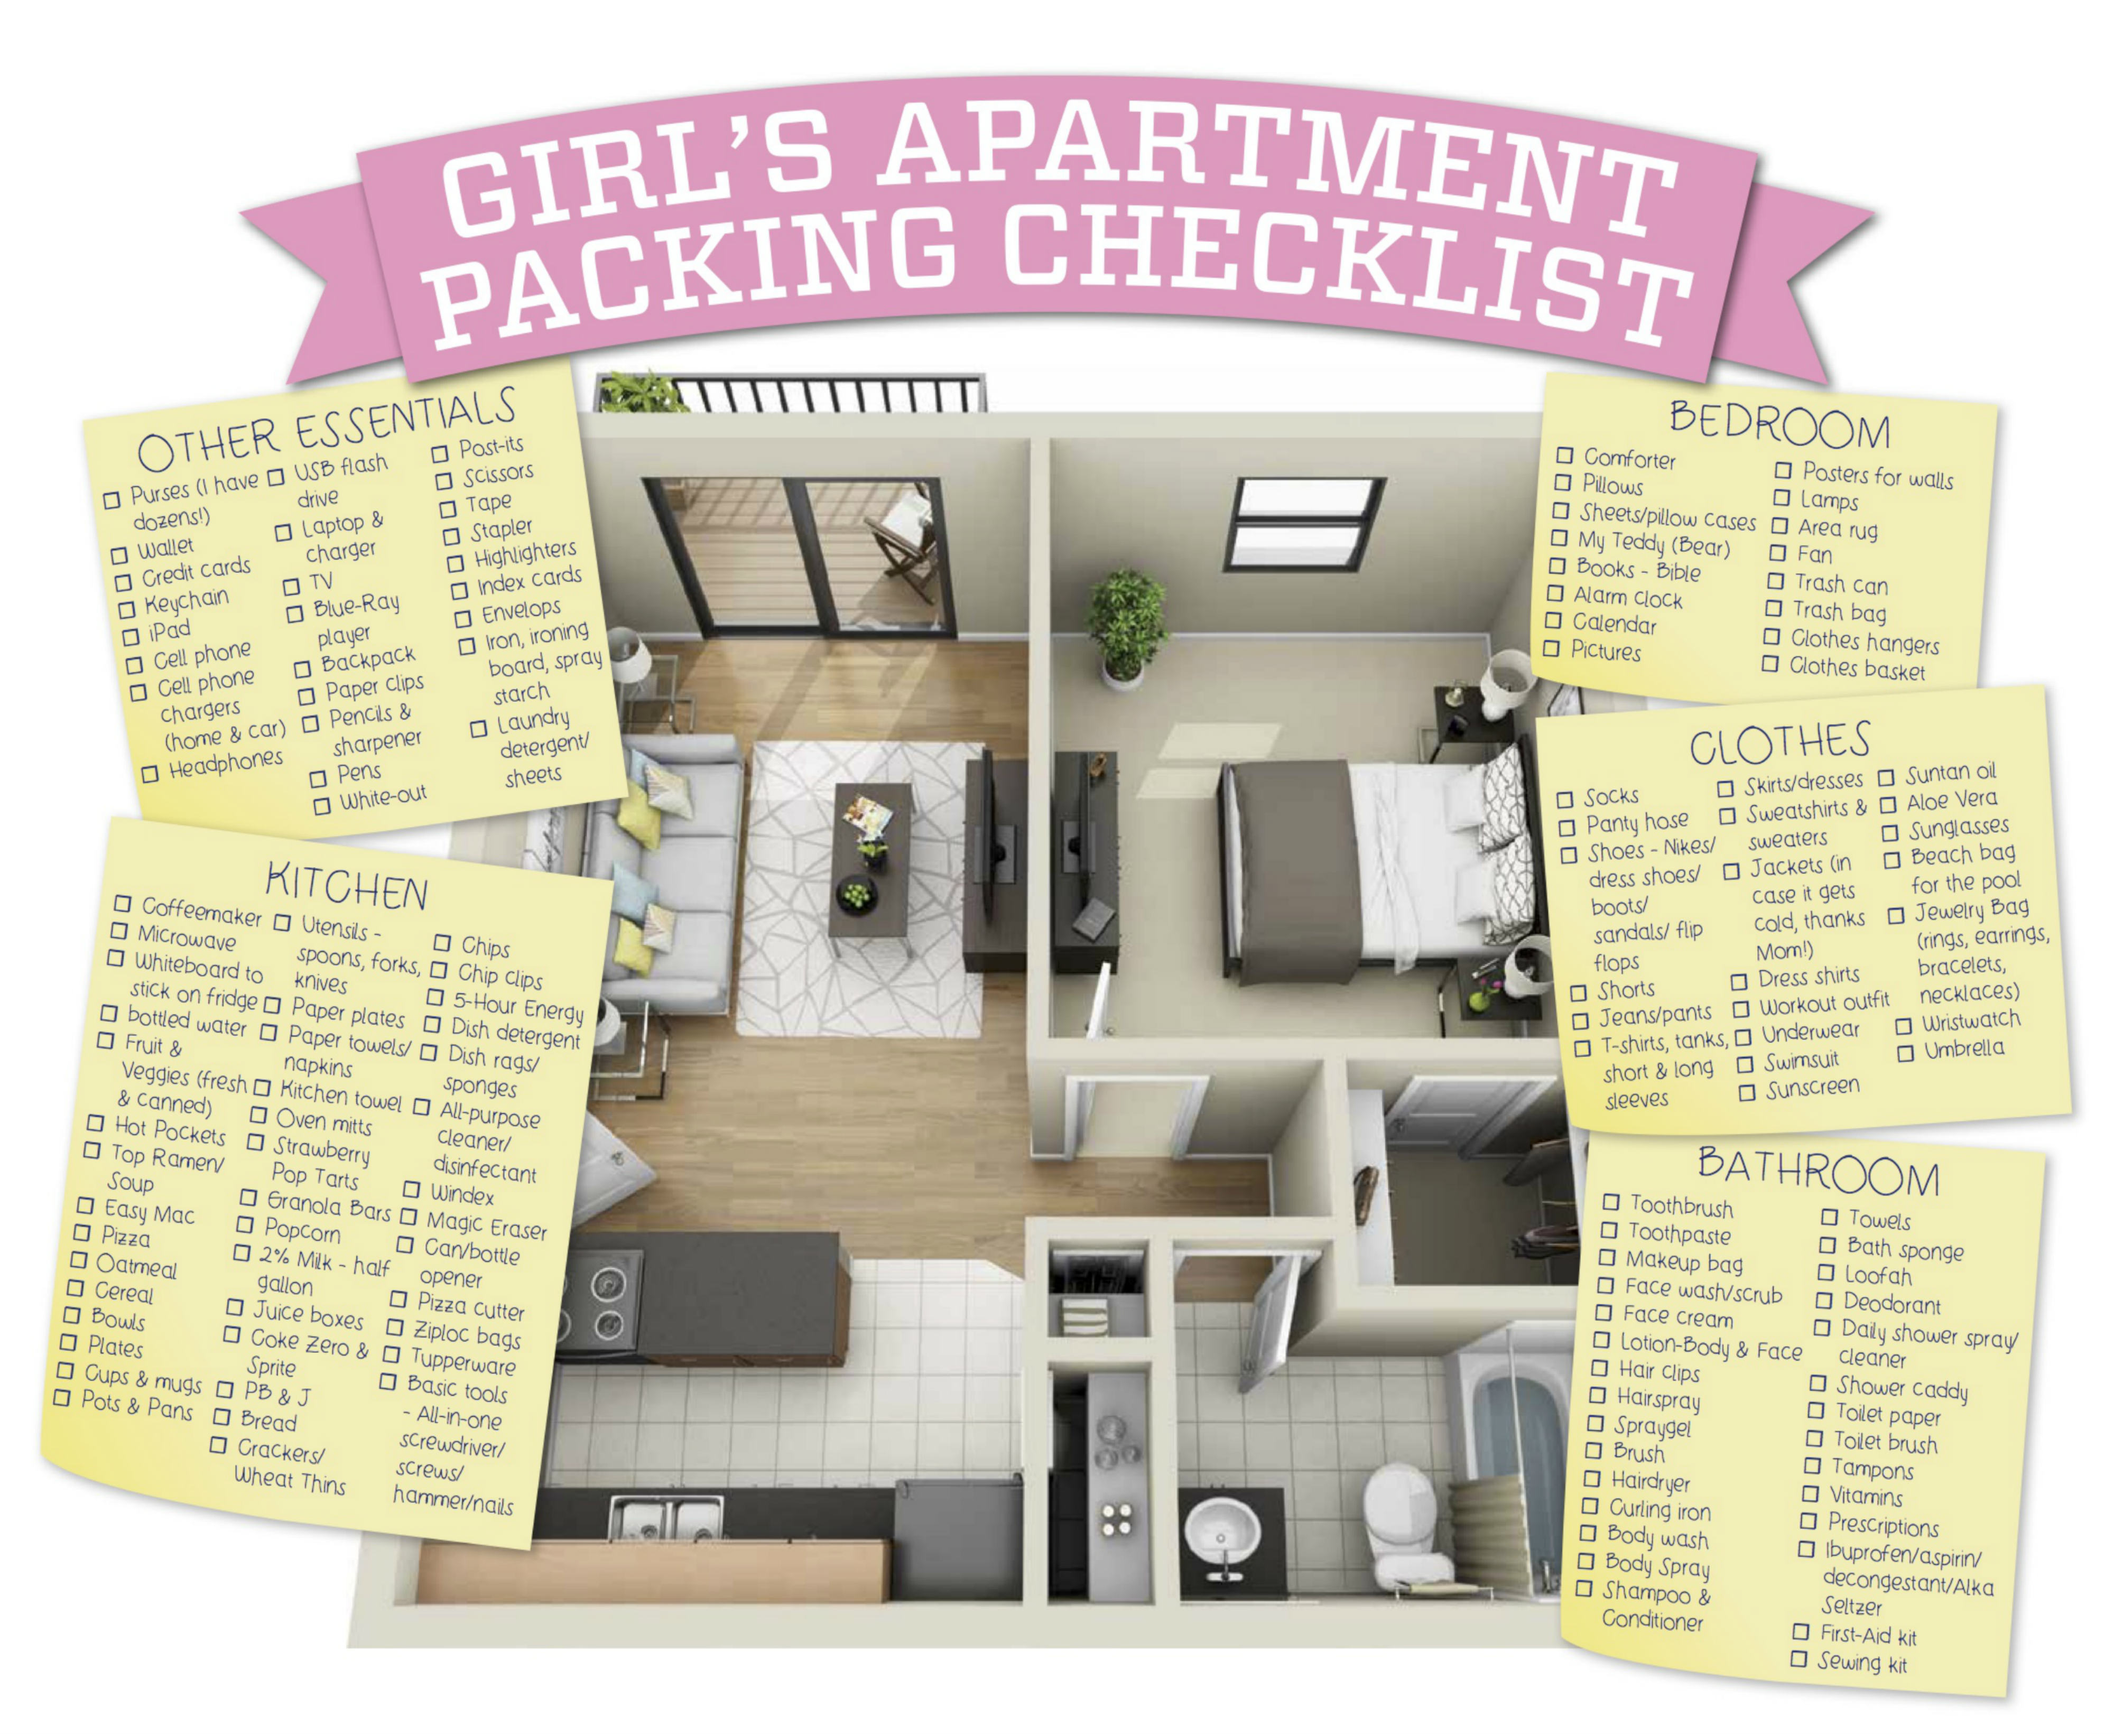 furnishing a college apartment checklist